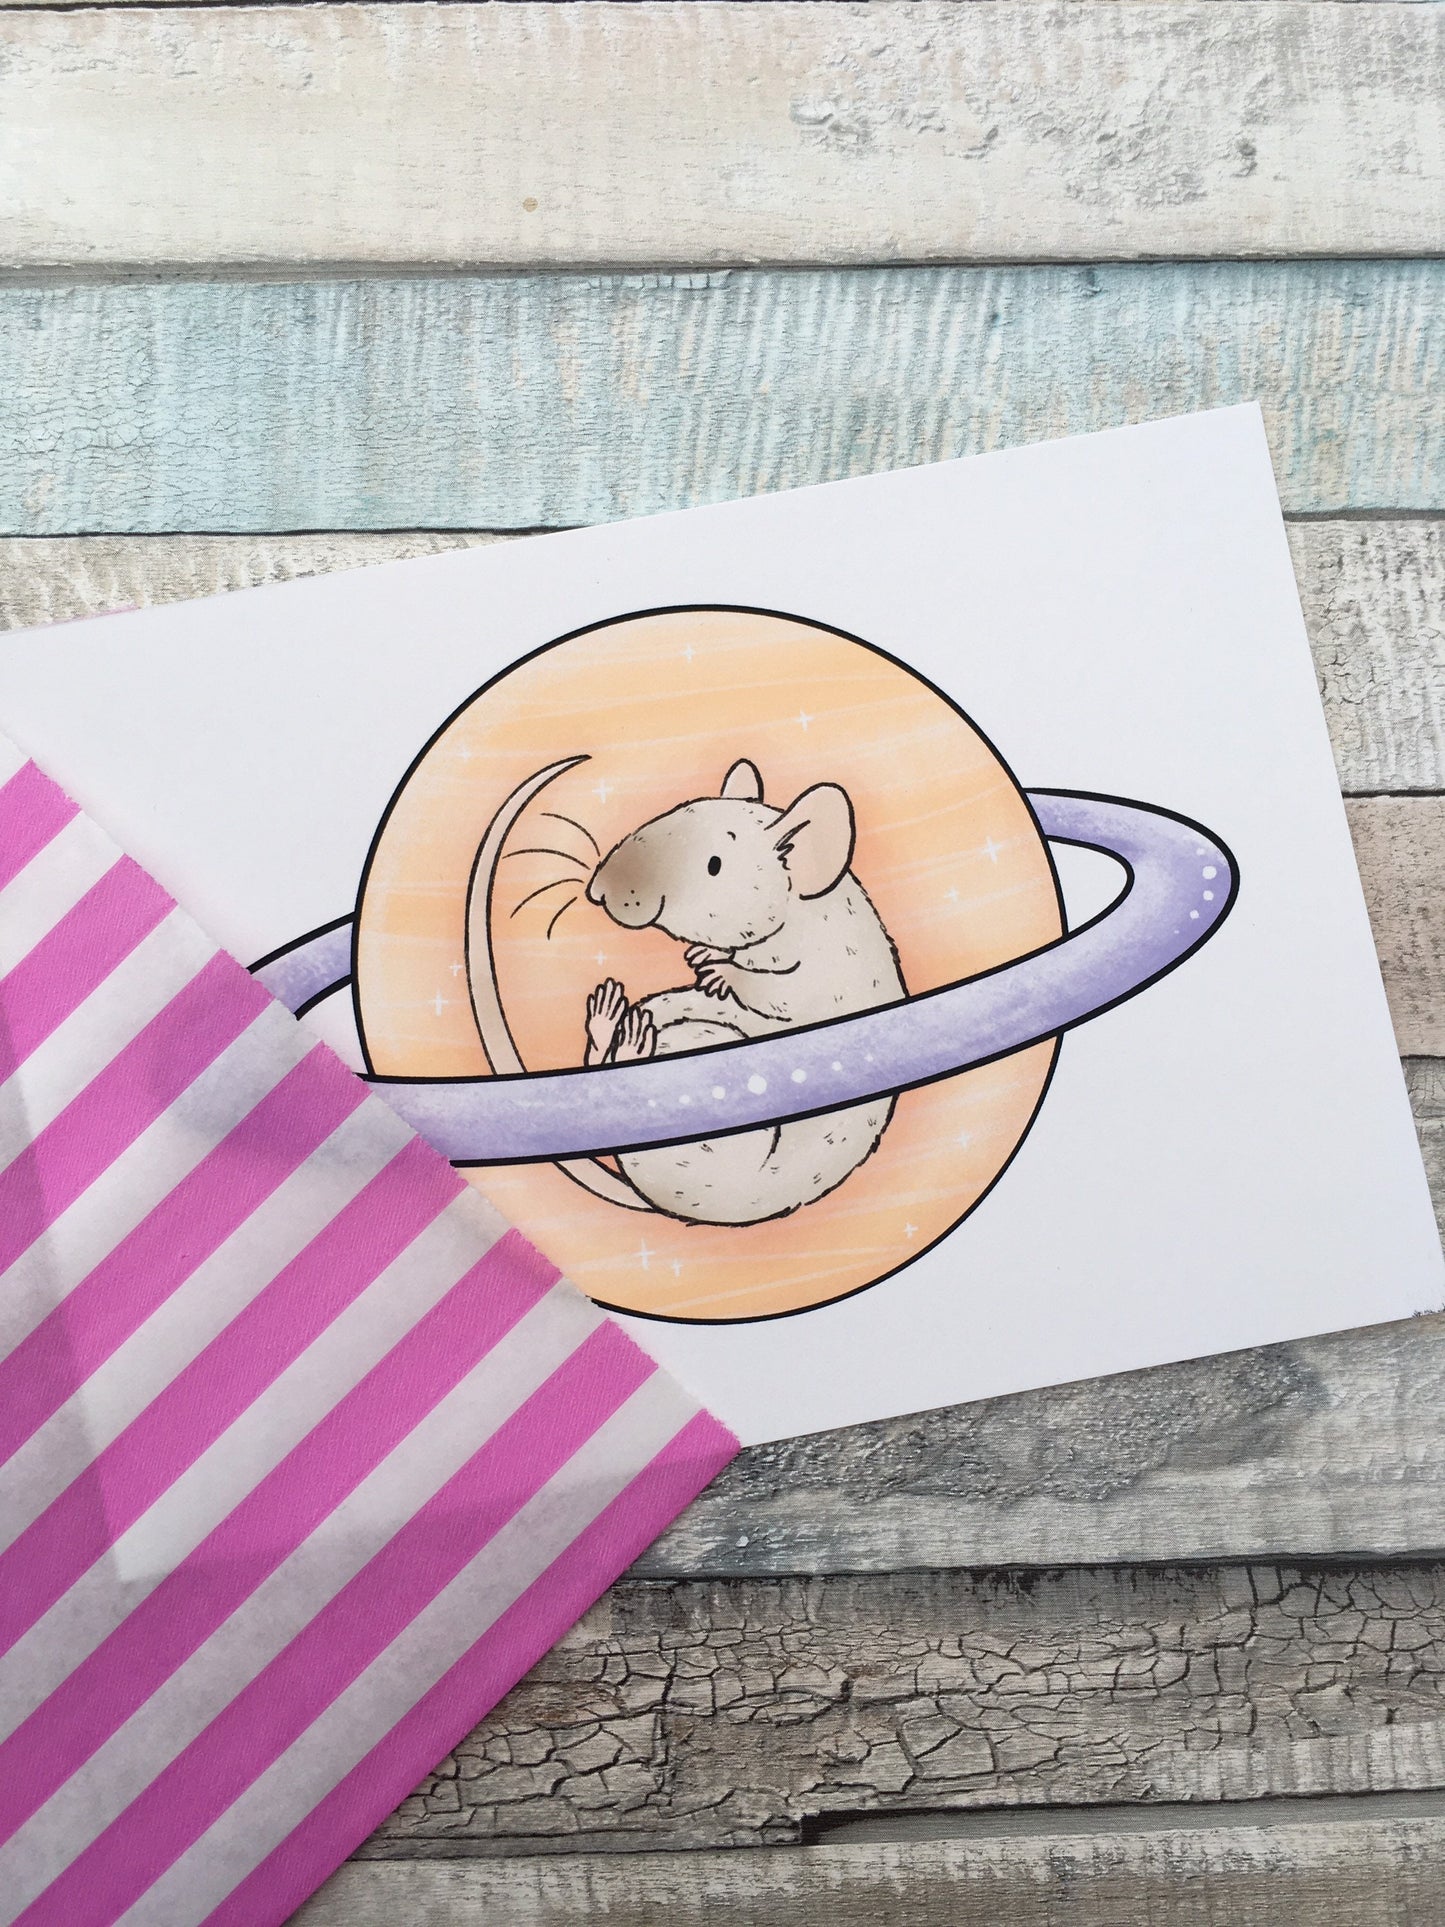 Saturn Space Rat Art Print - 6 x 4 inch and A5 Size - Cute Pet Rat Wall Art - Fancy Rat Gift